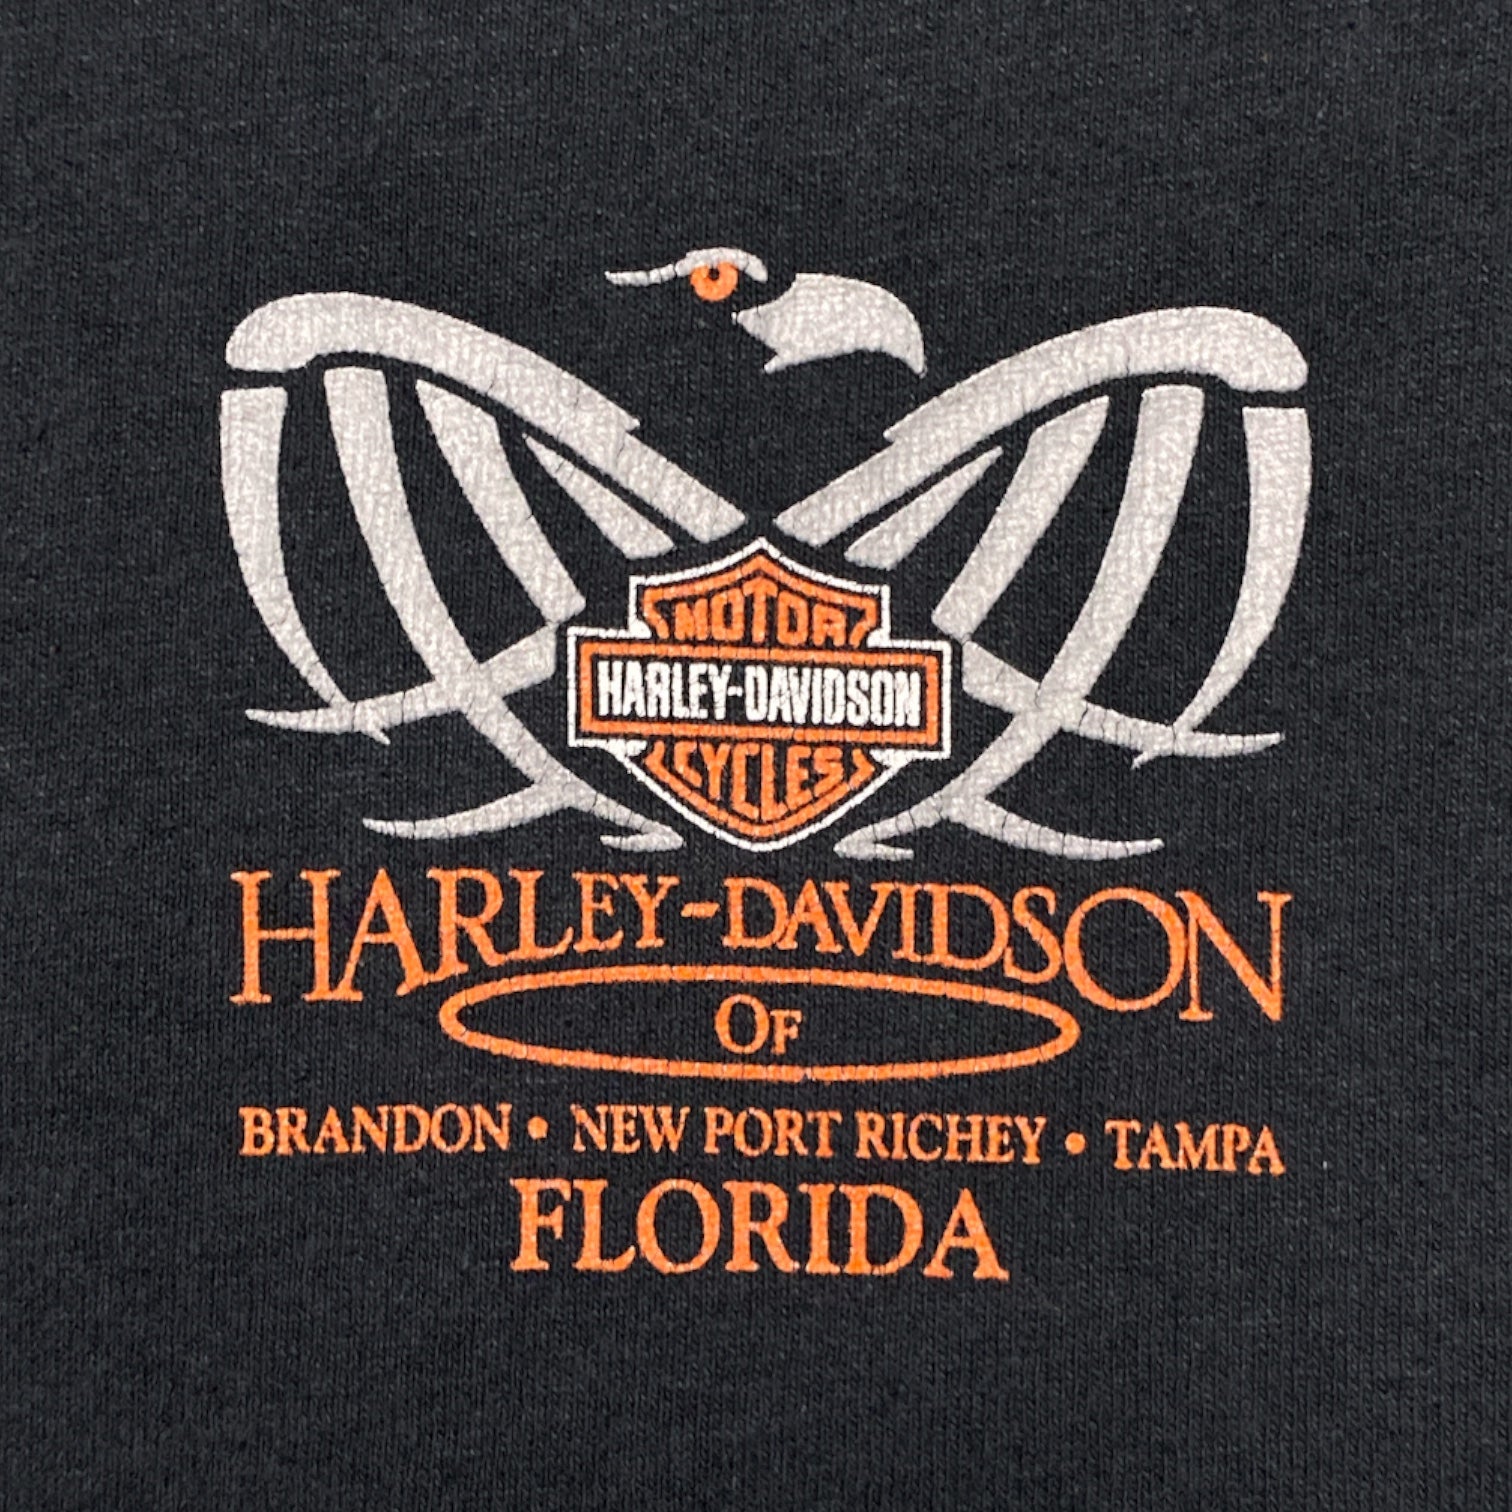 HARLEY-DAVIDSON CYCLES FLORIDA Tee